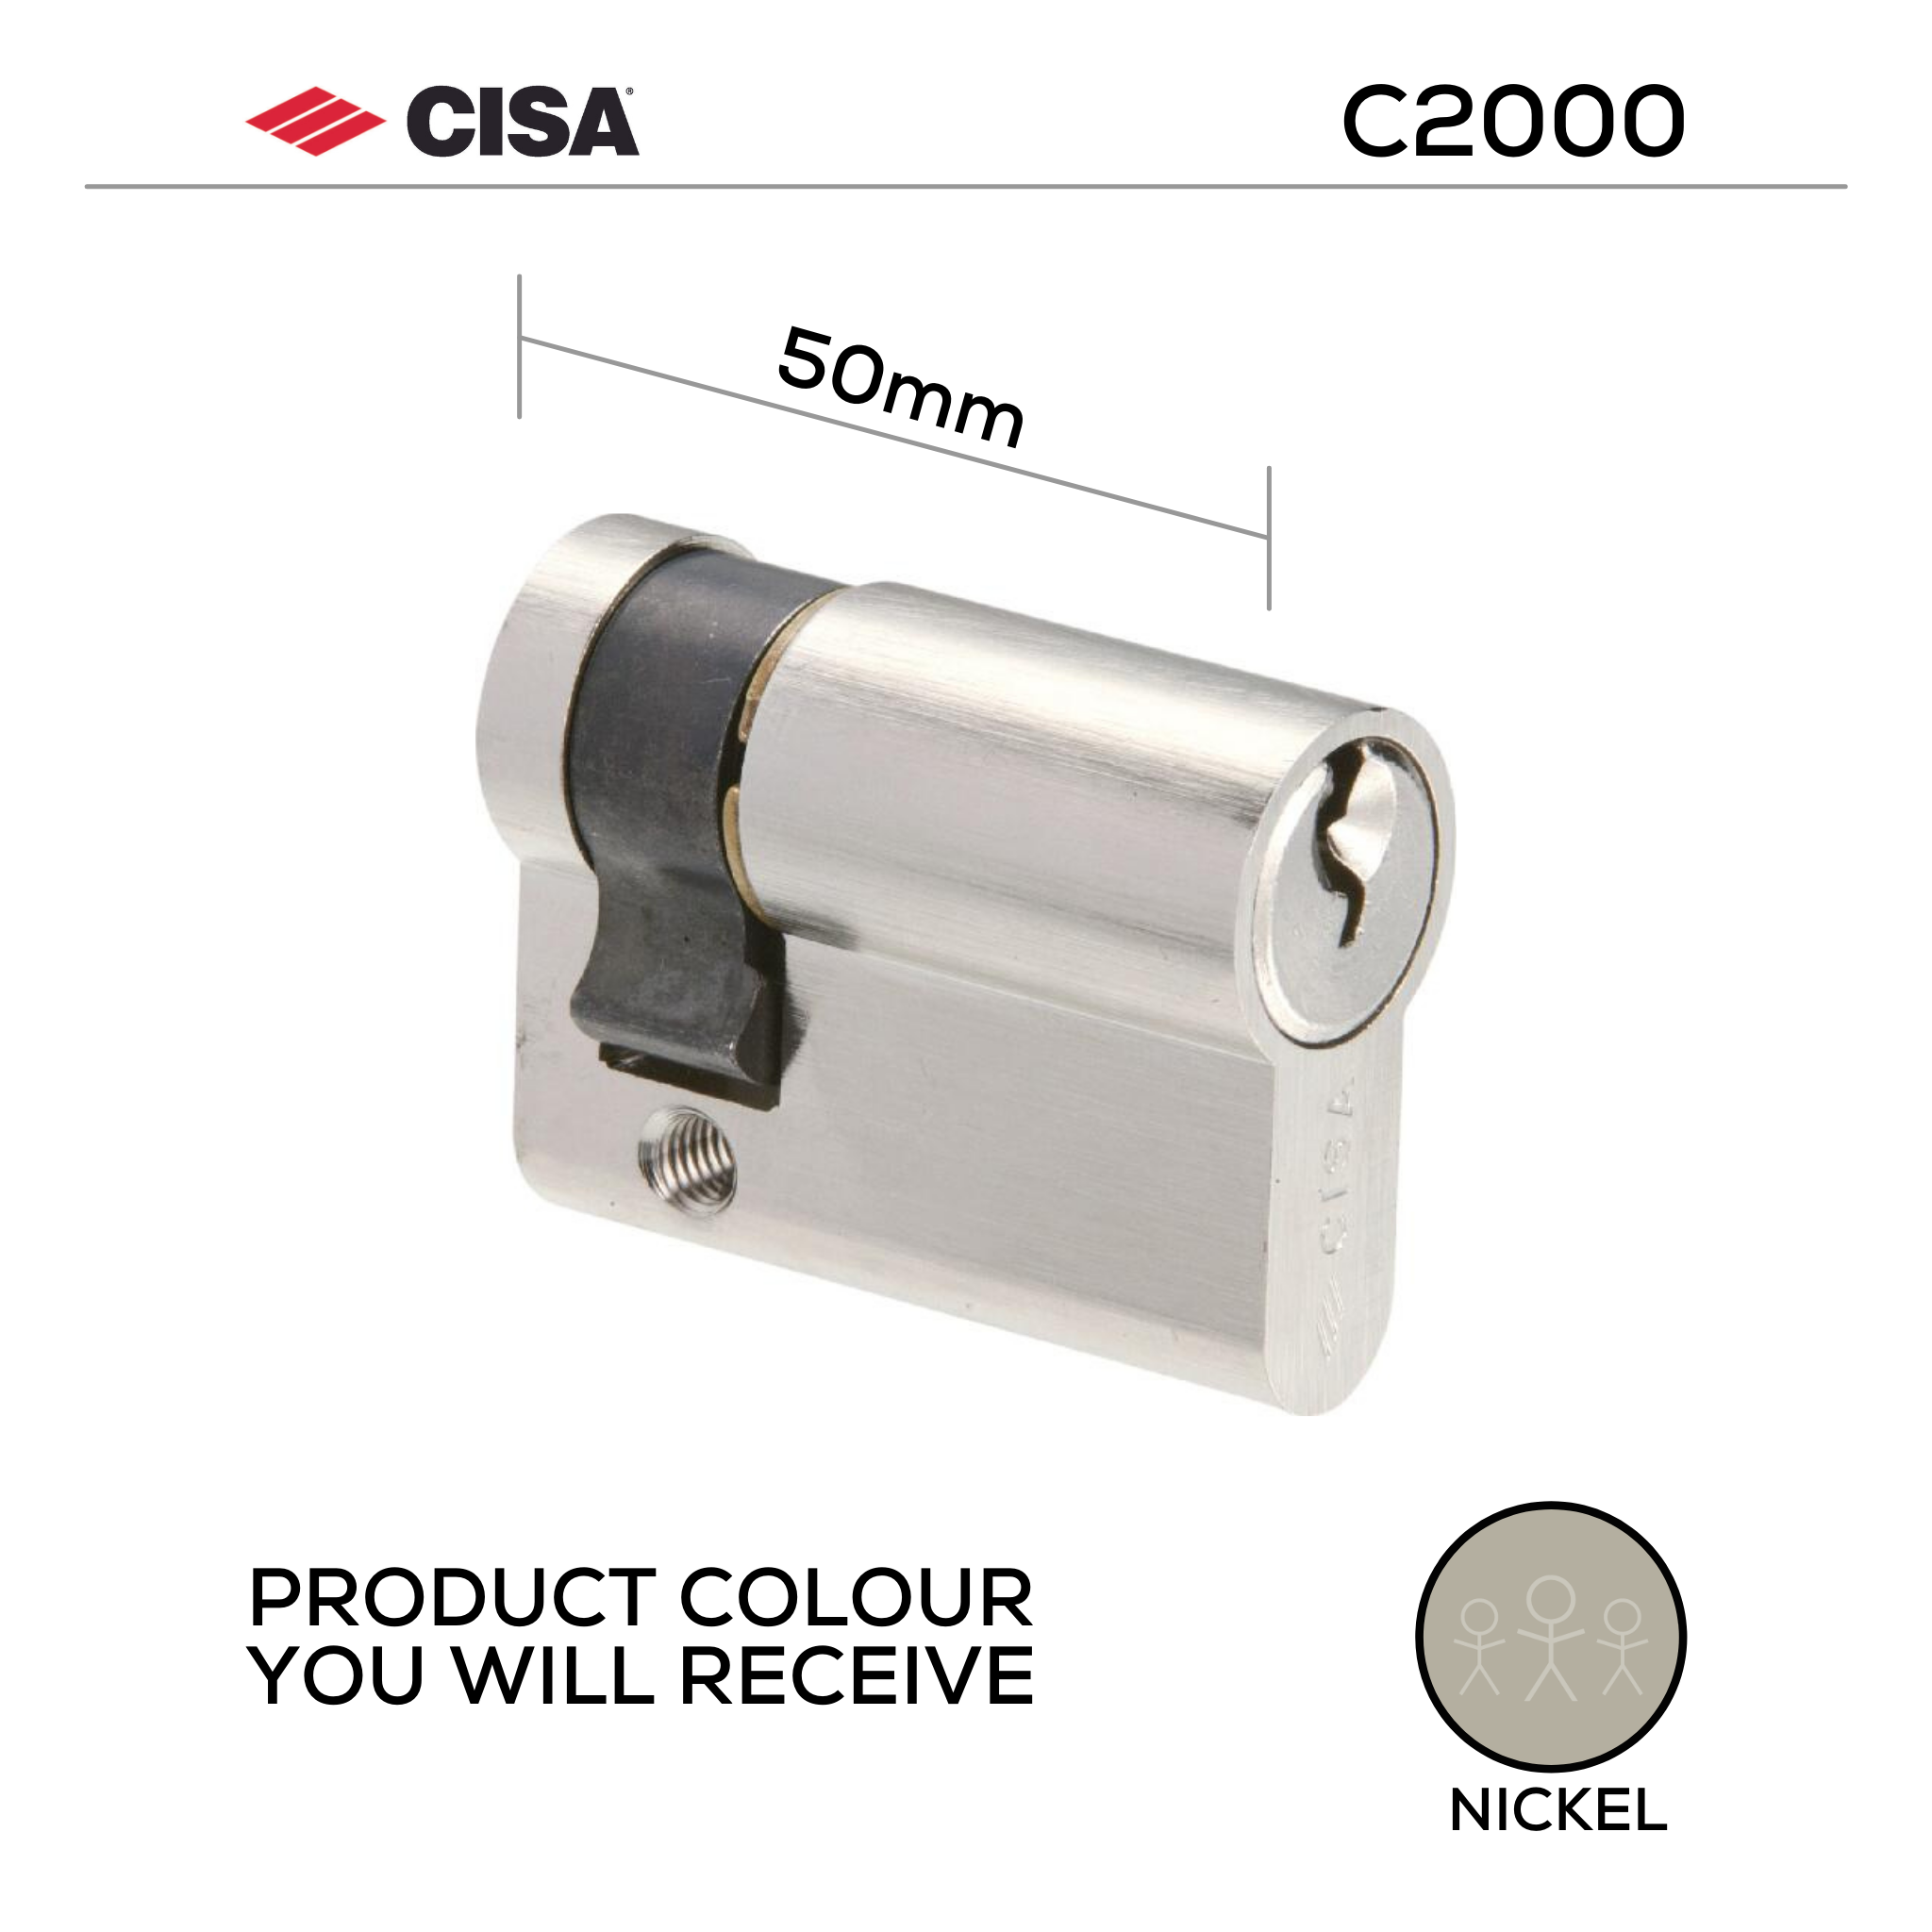 0G304-03-12-KD, 50mm - 39.5/10, Half (Single Cylinder), C2000, Key, Keyed to Differ (Standard), 3 Keys, 5 Pin, Nickel, CISA